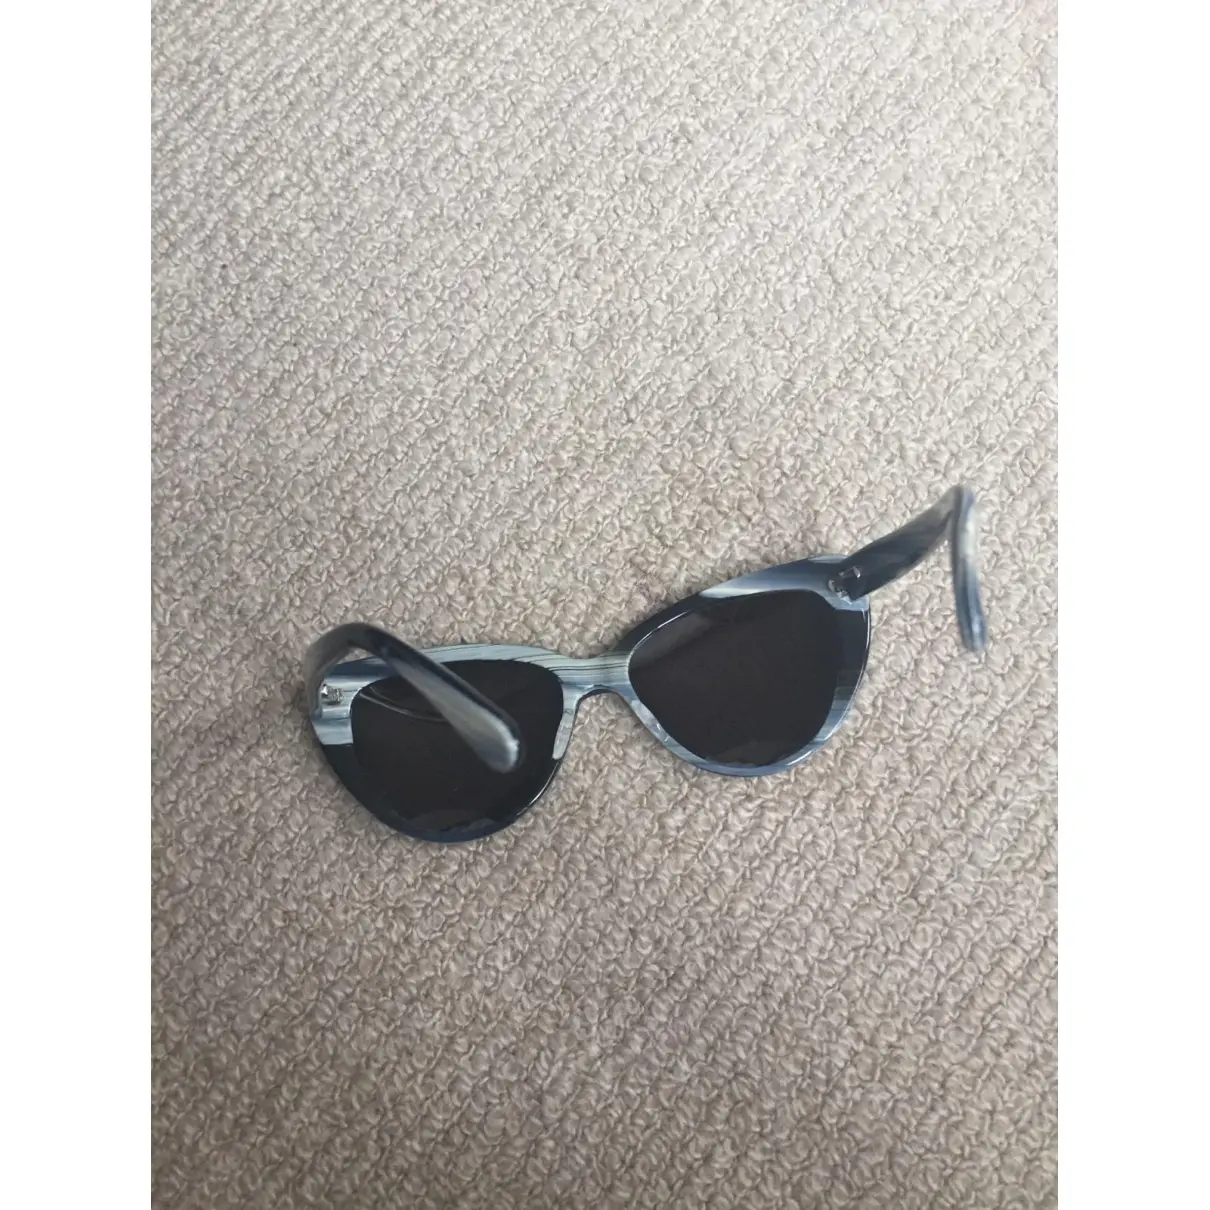 Prism Sunglasses for sale